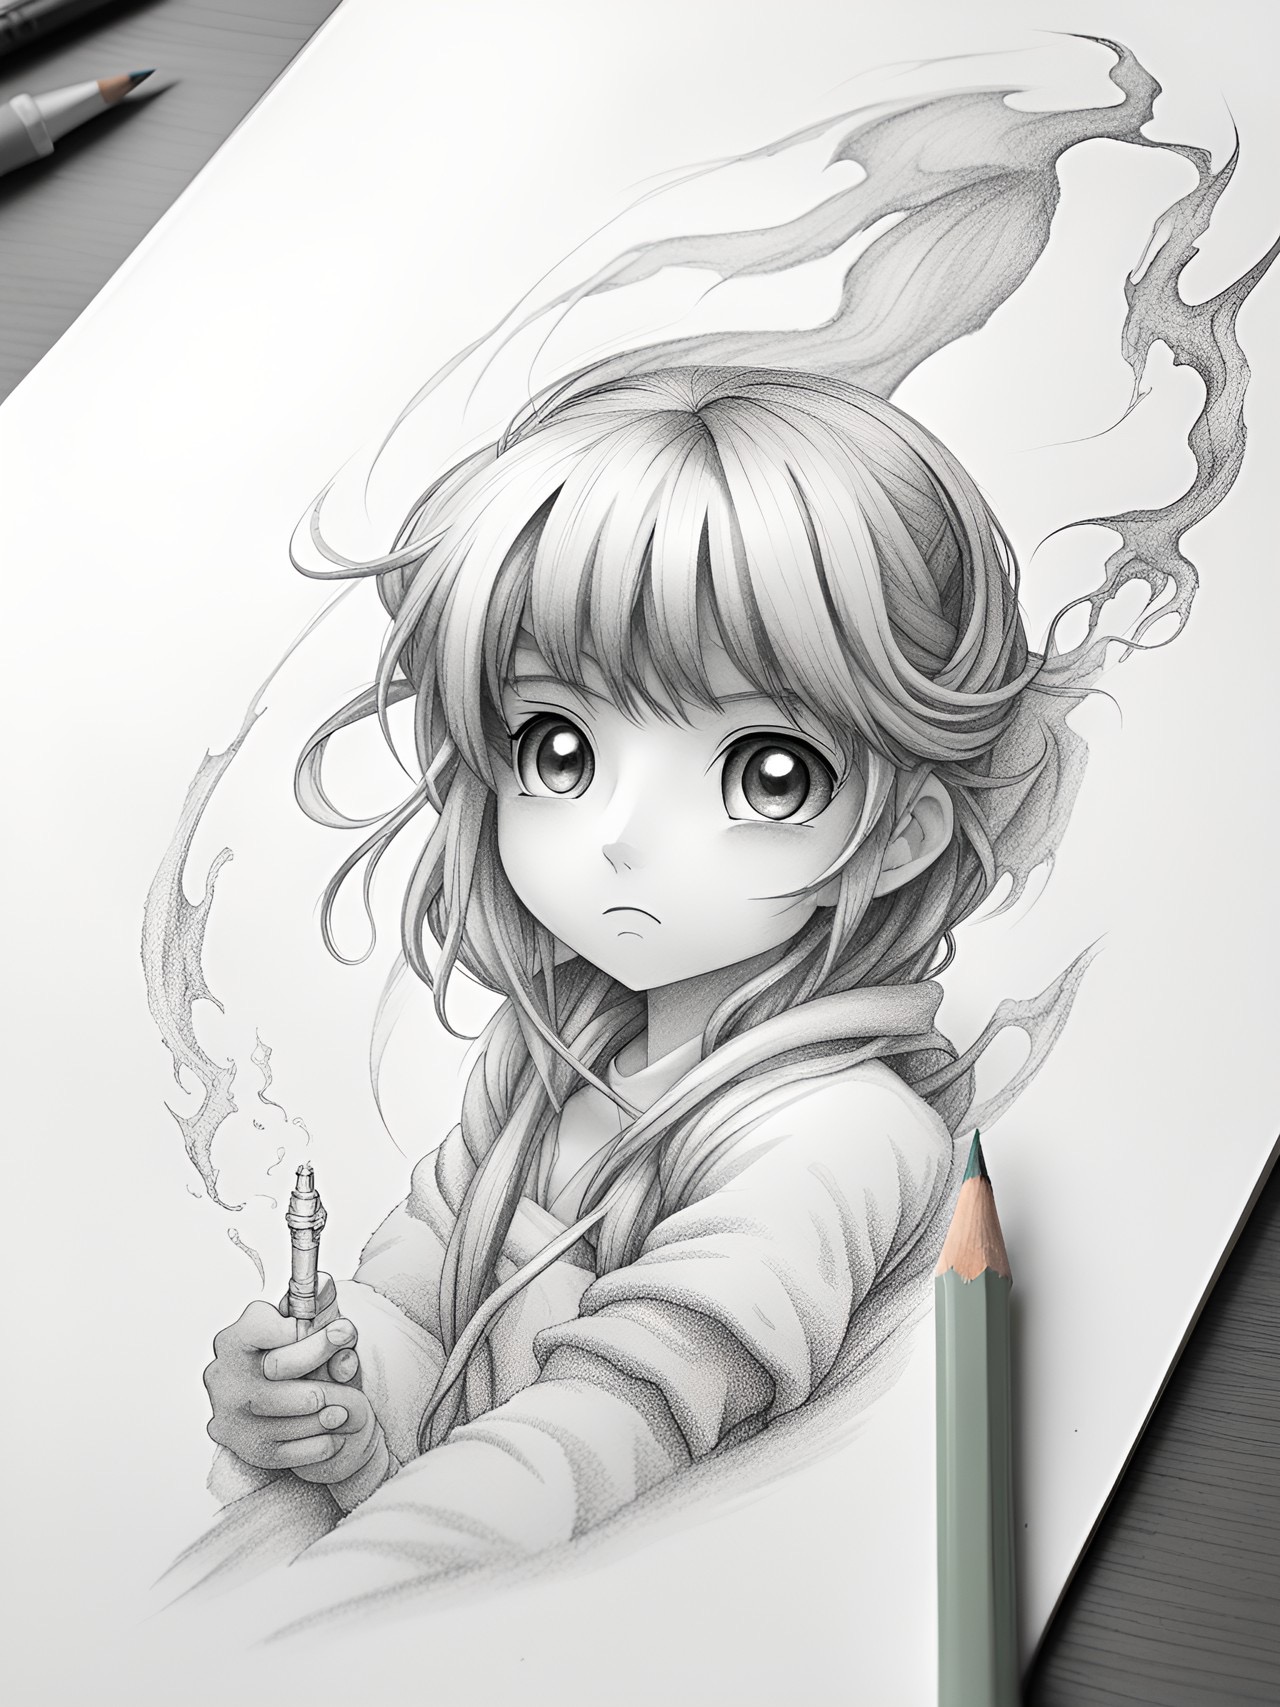 Cute Anime Girl pfp by RhasaArt on DeviantArt